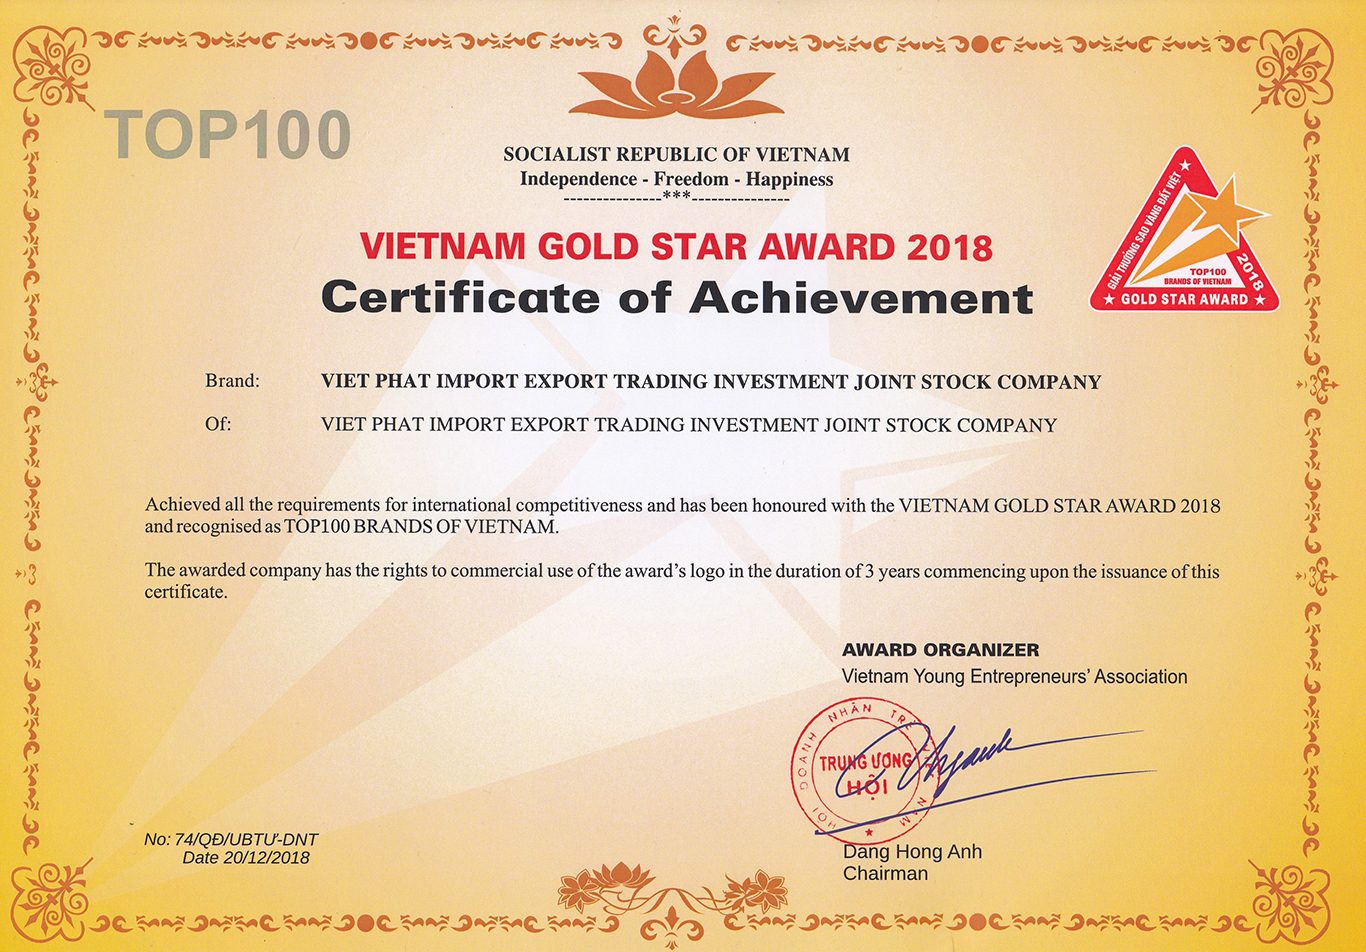 VIET PHAT GROUP – TOP 100 BRANDS OF VIETNAM – VIETNAM GOLD STAR AWARD 2018